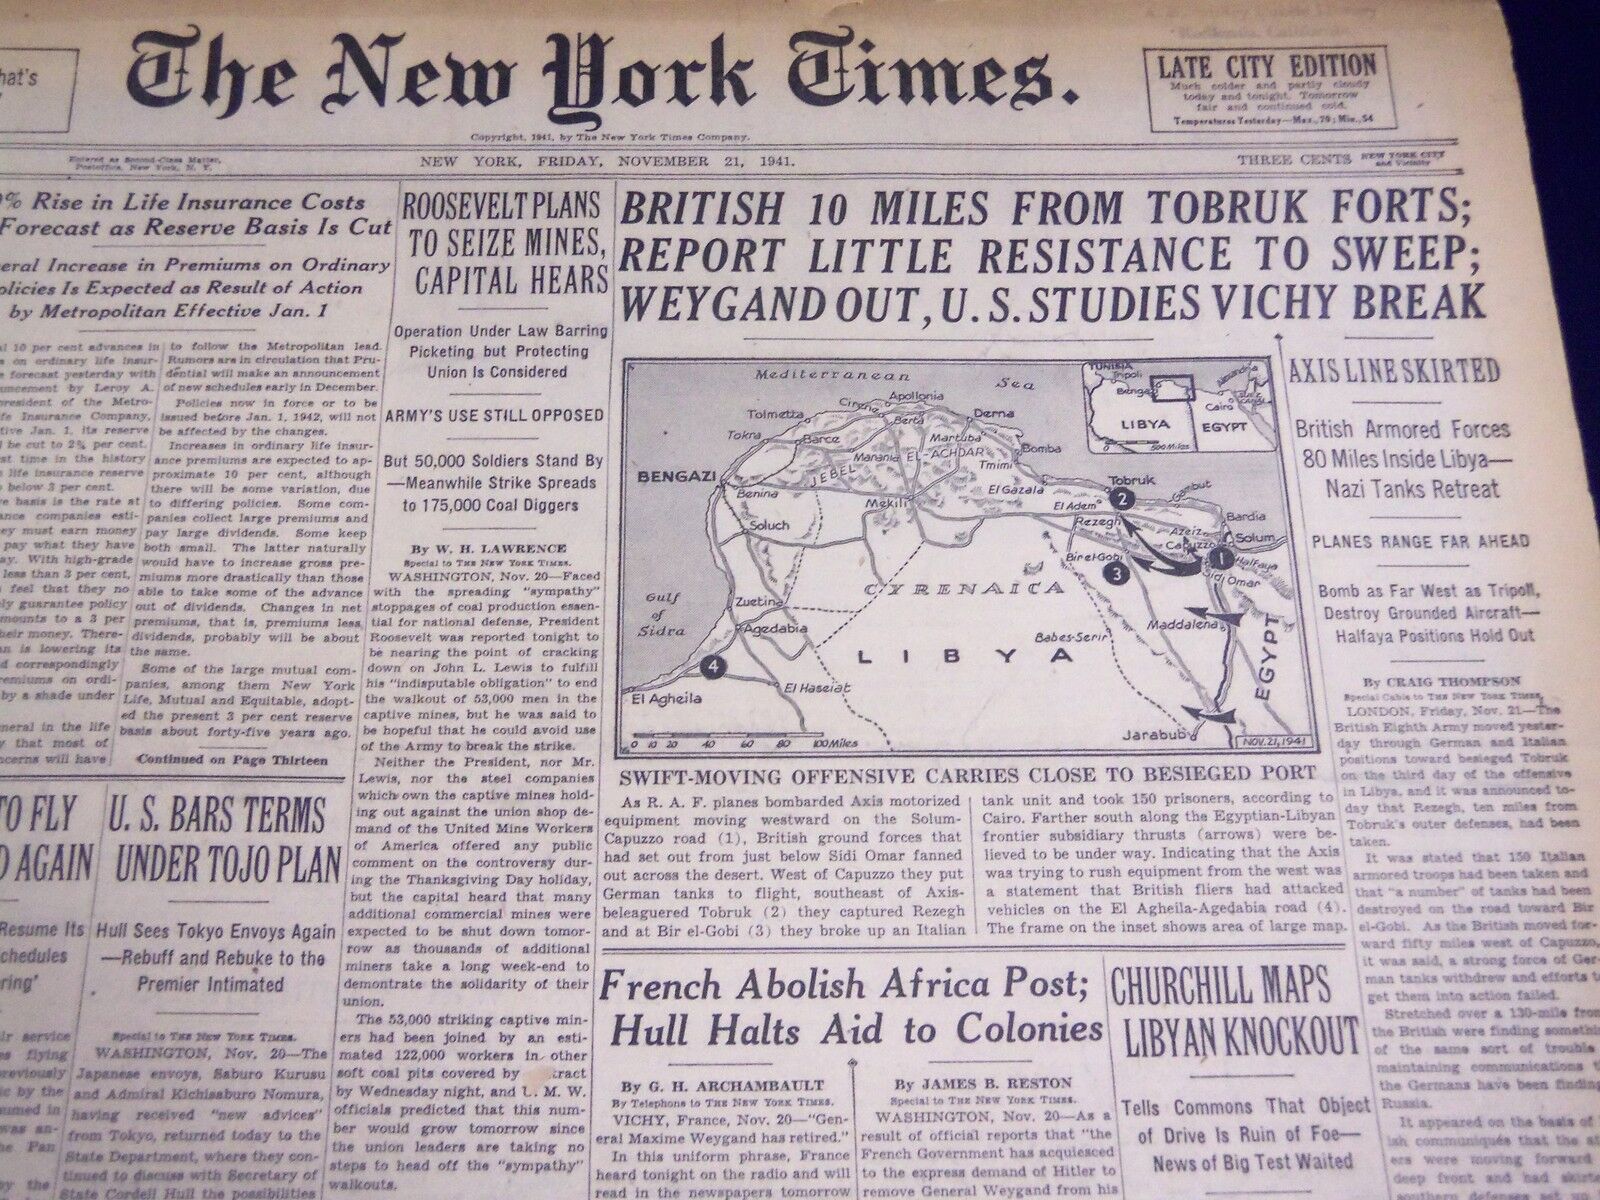 1941 NOV 21 NEW YORK TIMES - BRITISH 10 MILES FROM TOBRUK FORTS - NT 1112